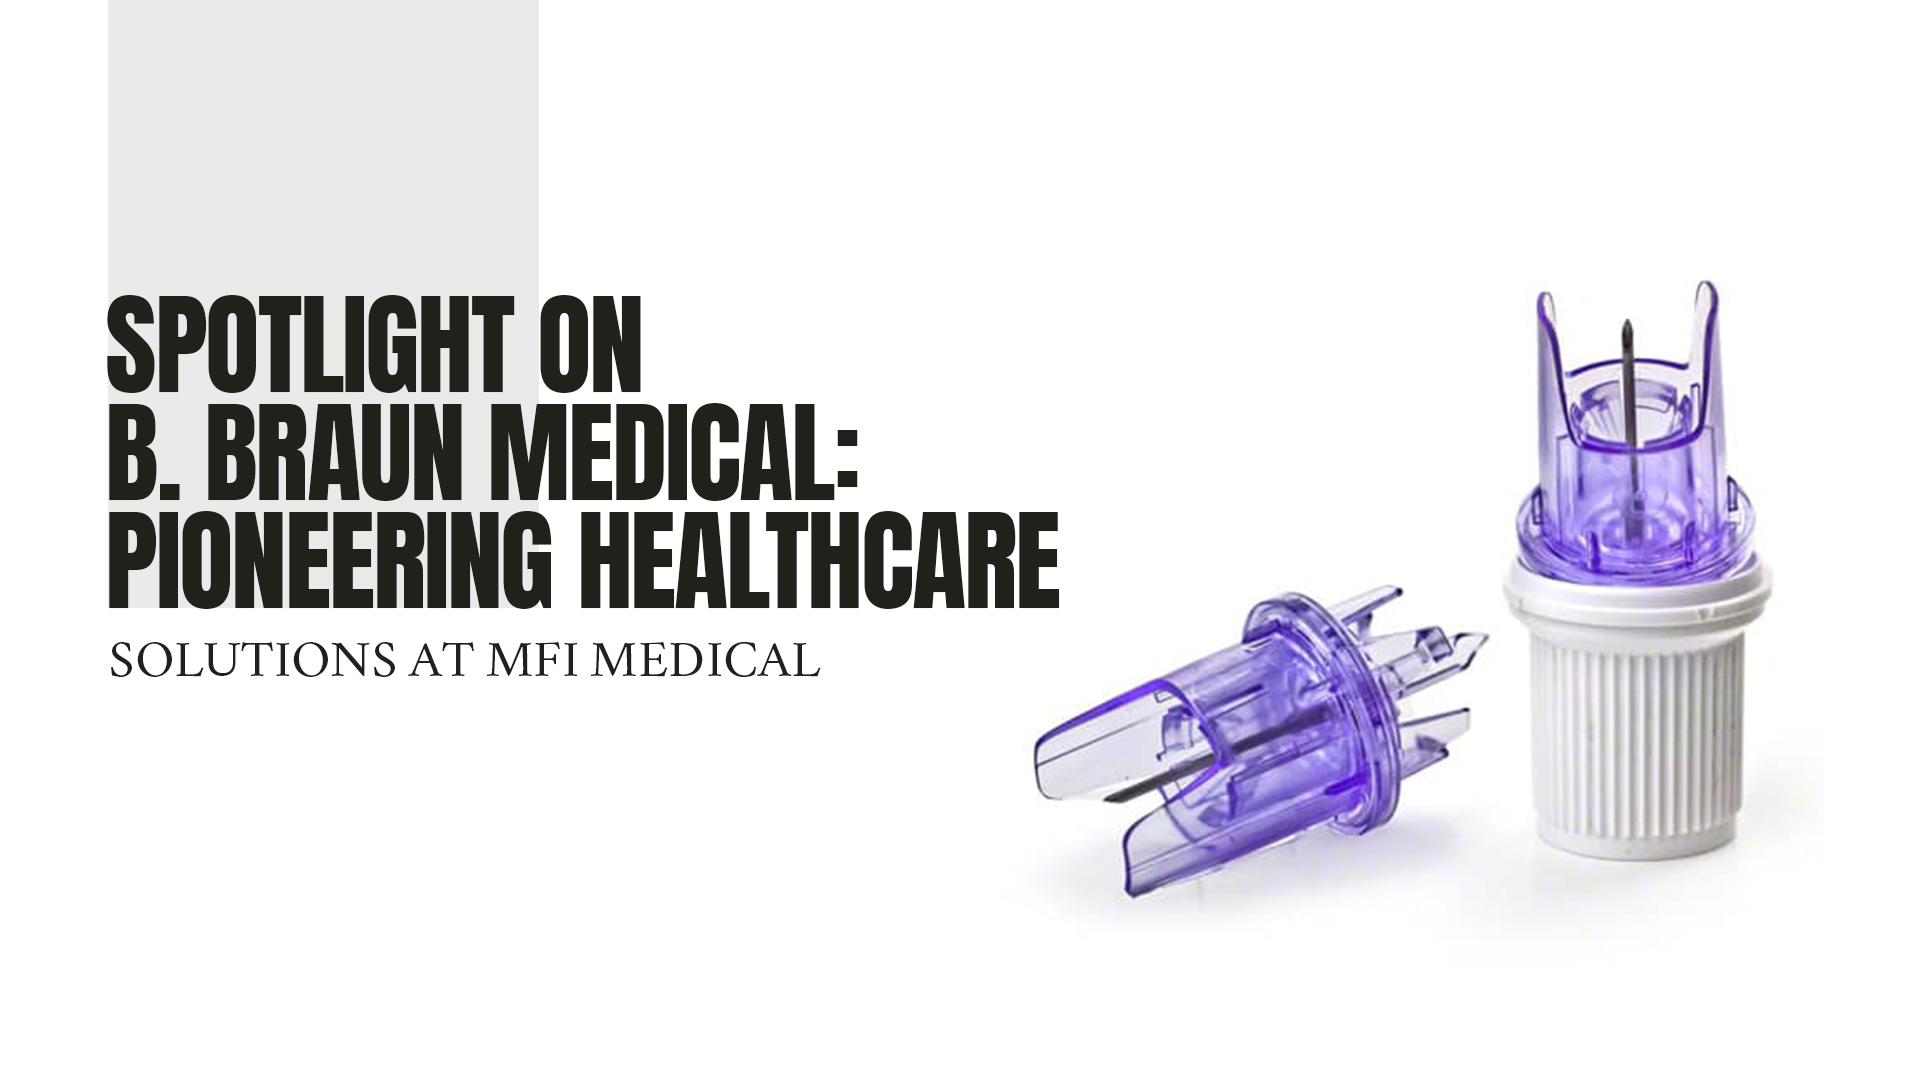 Spotlight on B. Braun Medical: Pioneering Healthcare Solutions at MFI Medical